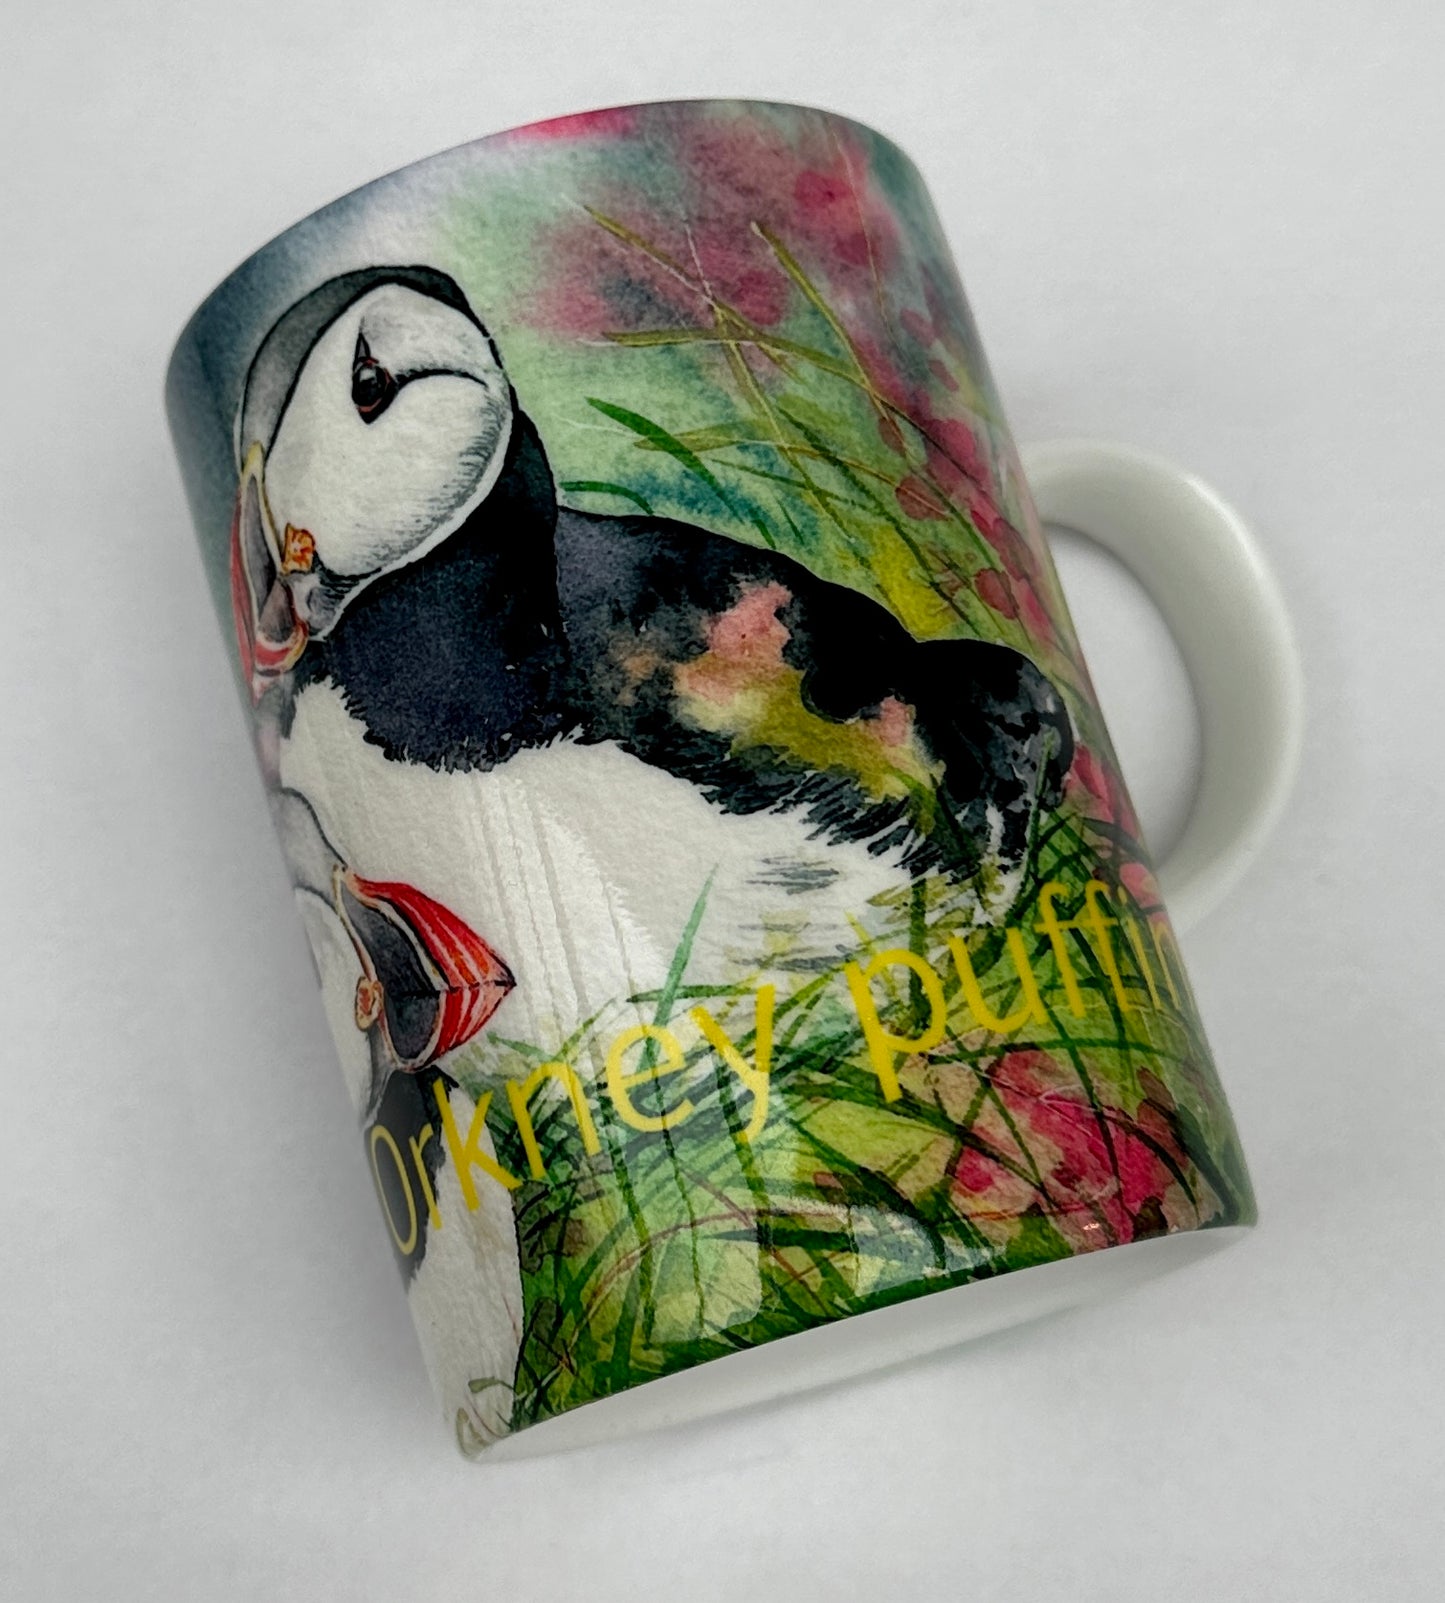 bone china mug printed with a watercolour painting of puffins